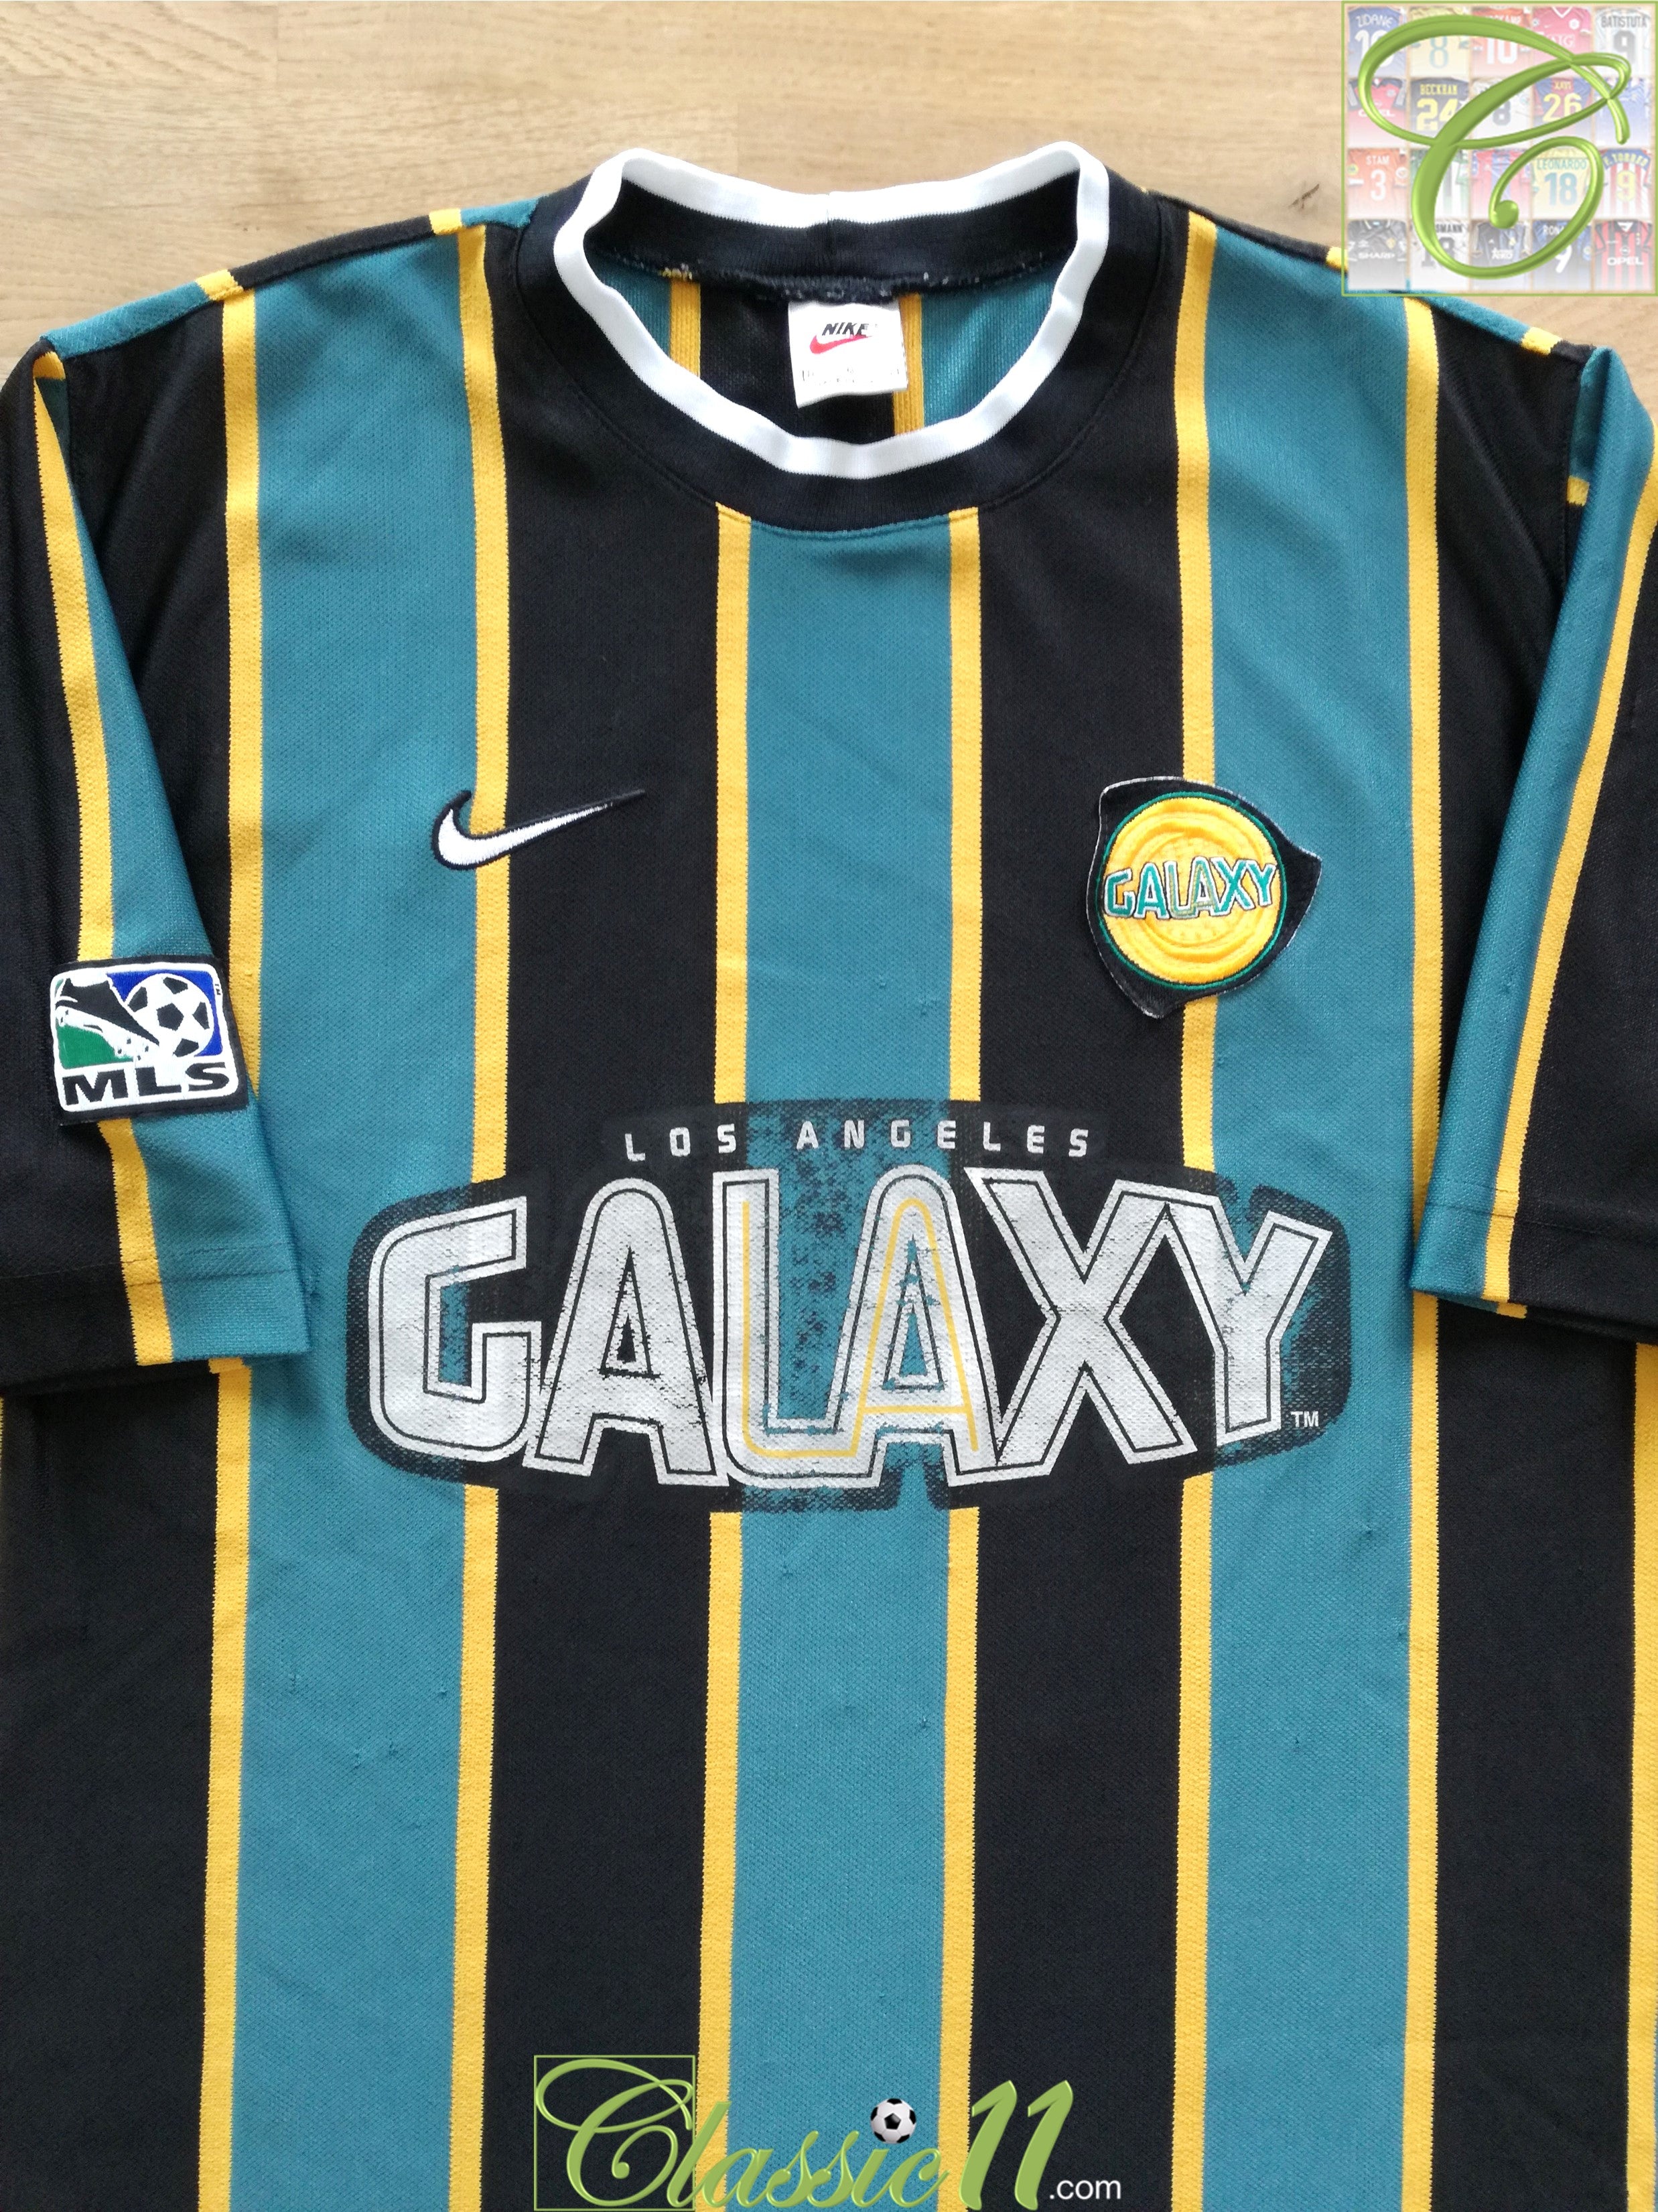 1998 LA Galaxy Home MLS Football Shirt / Old Nike Soccer Jersey